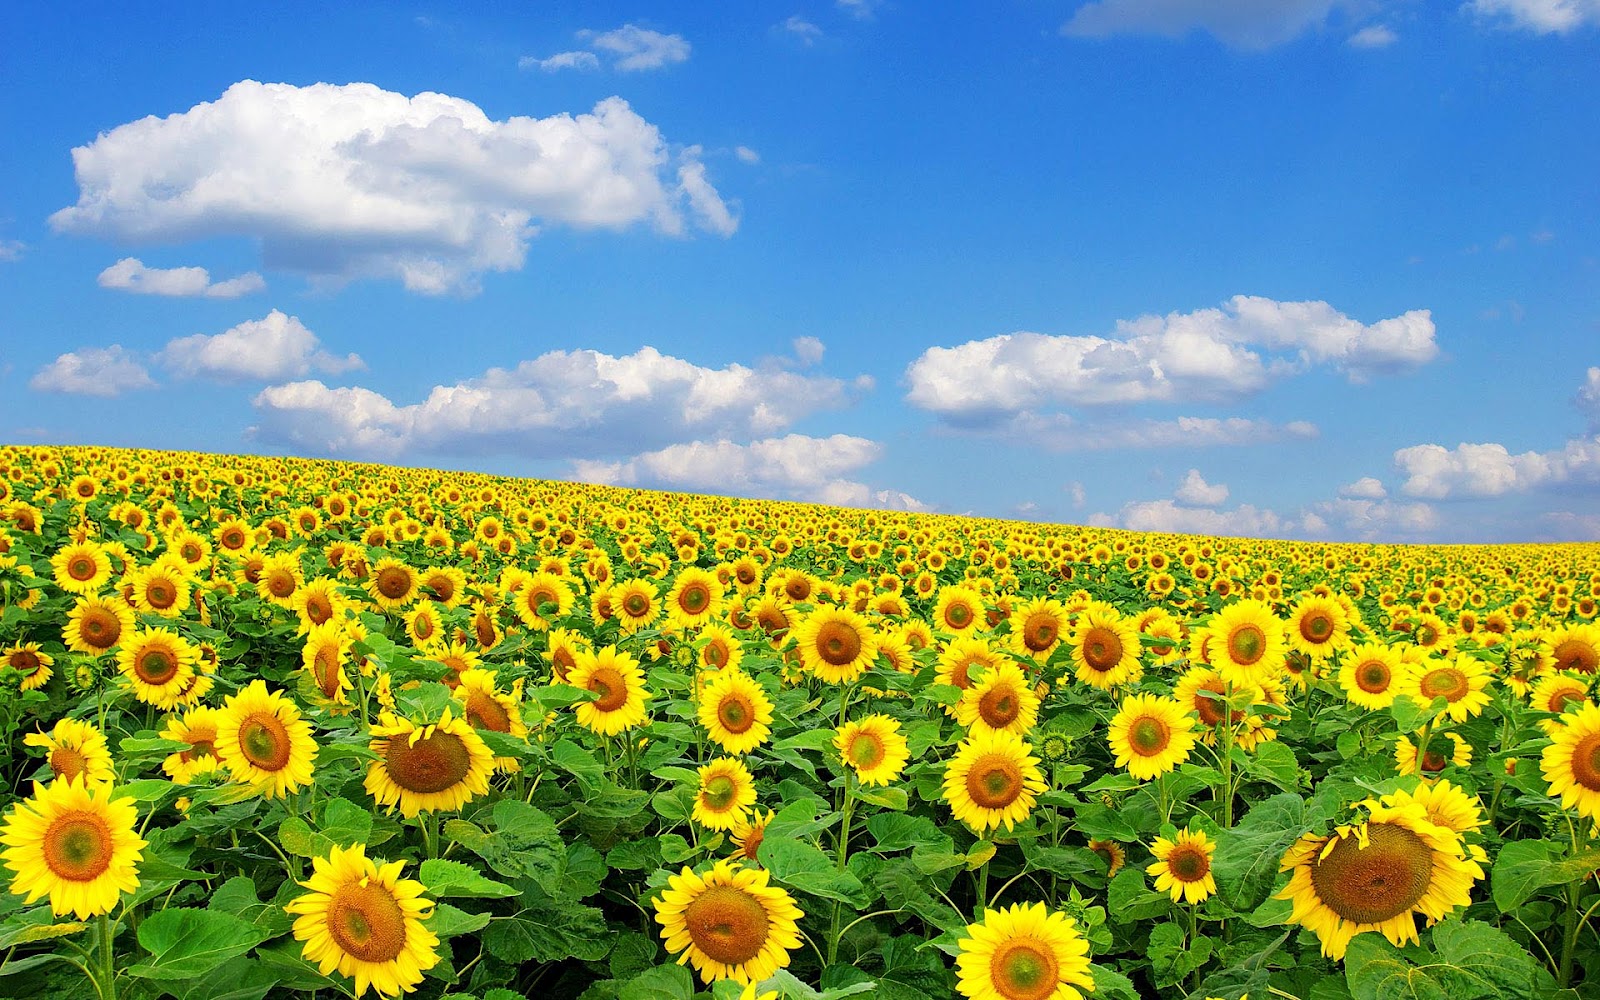 HD Sunflowers Wallpaper Top Best For Desktop